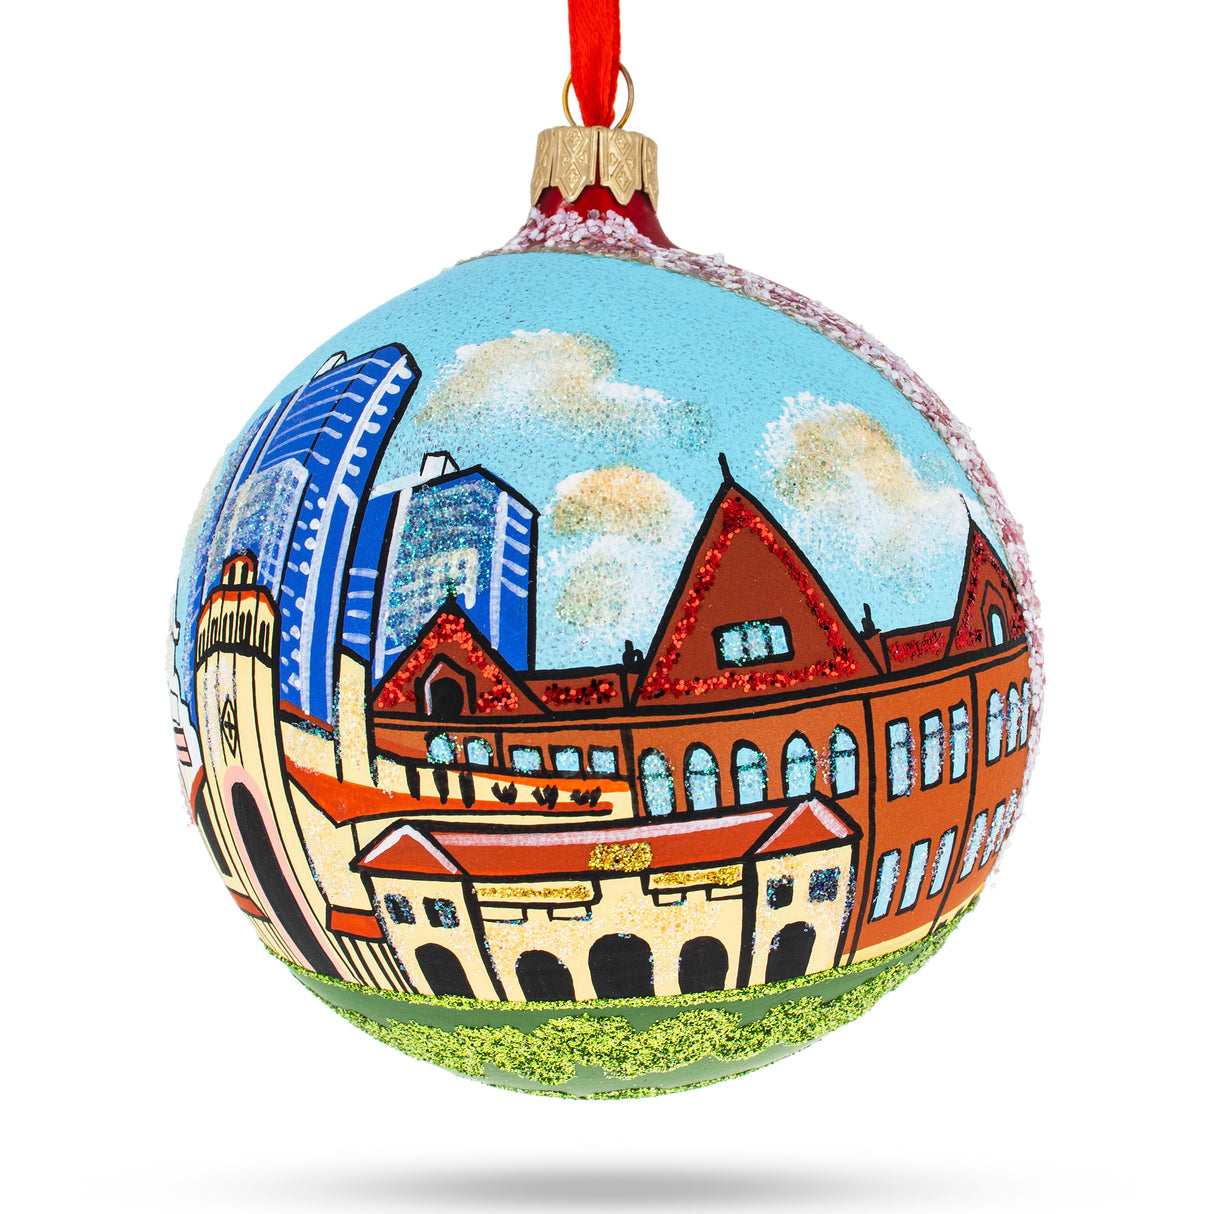 Santa Ana, California Glass Ball Christmas Ornament 4 Inches in Multi color, Round shape